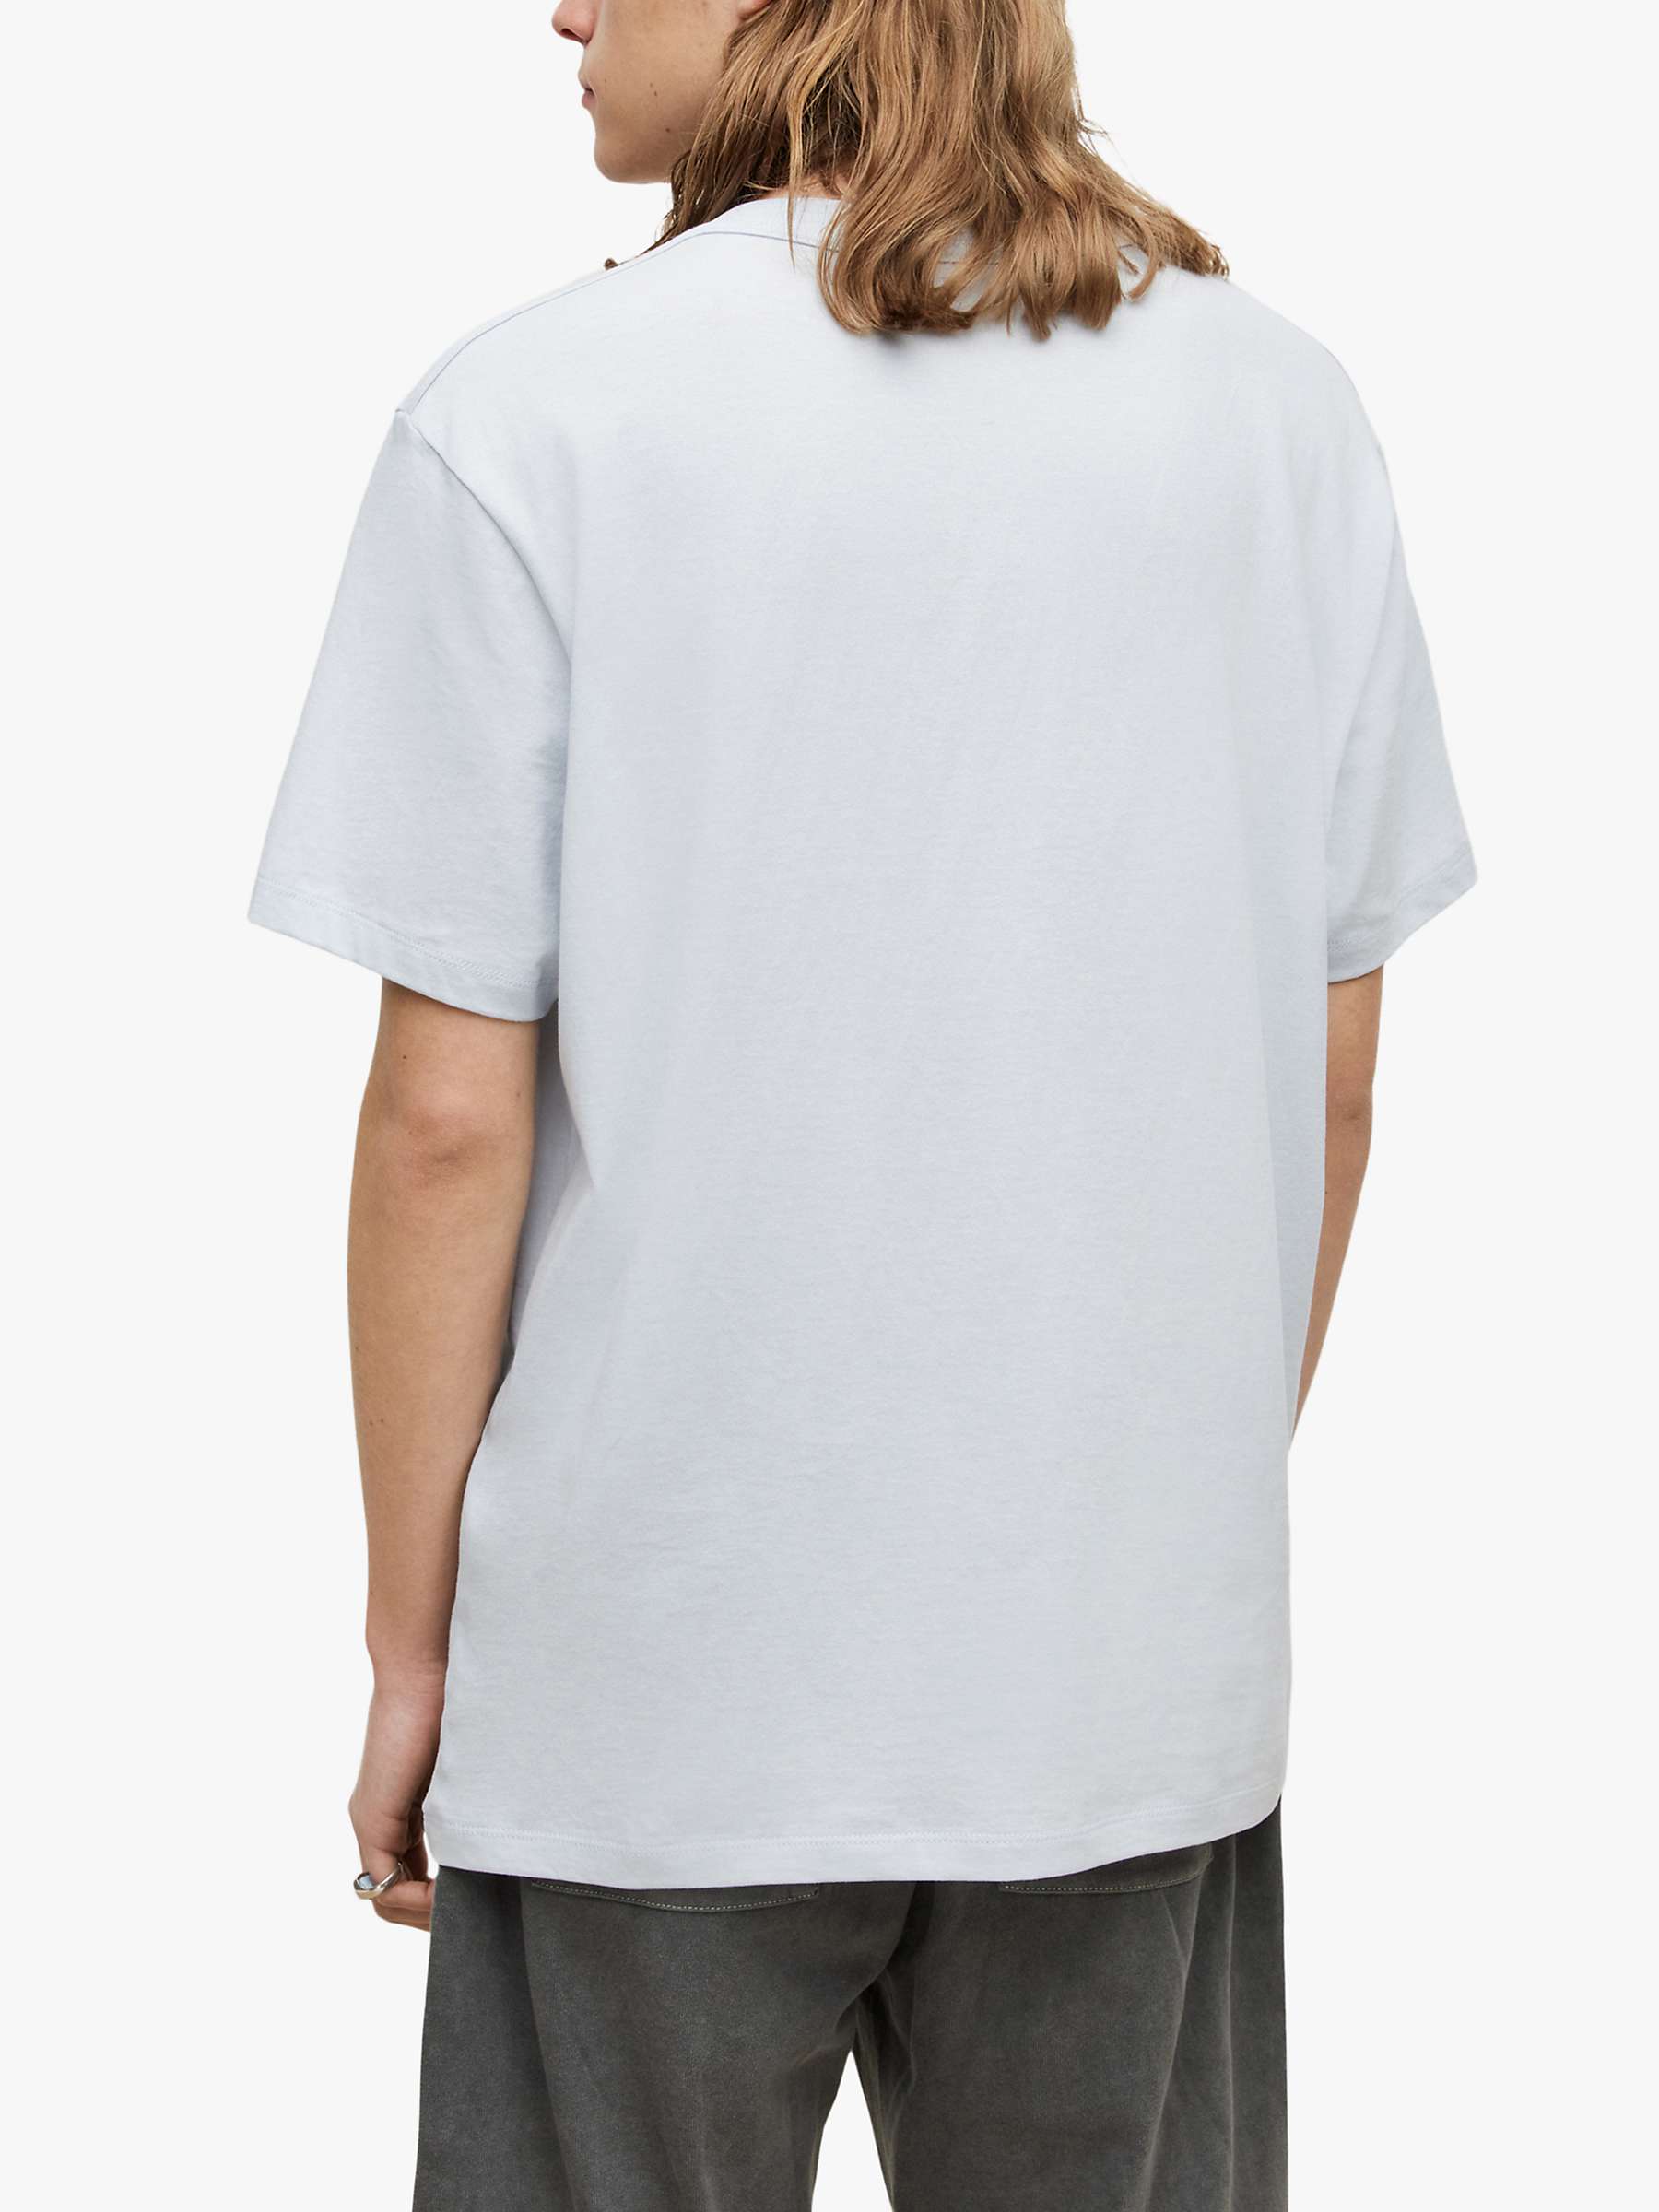 Buy AllSaints Opposition Short Sleeve Crew Neck T-Shirt Online at johnlewis.com